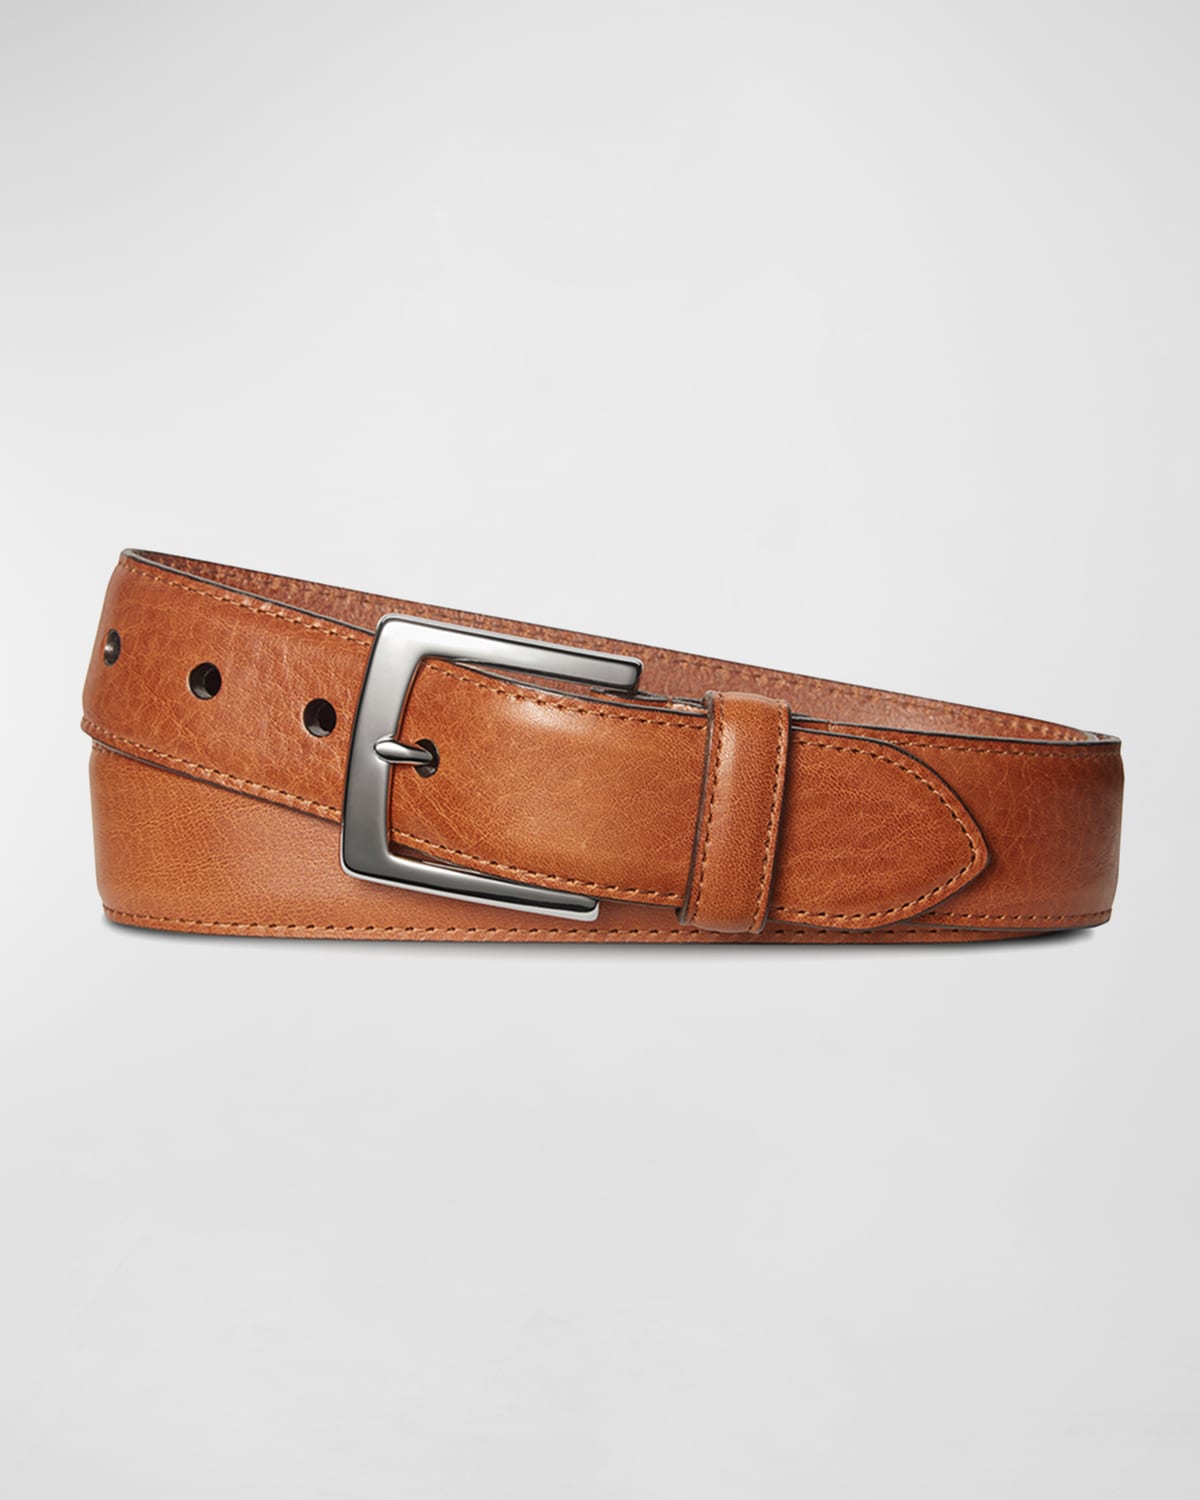 Men's Bedrock Leather Belt